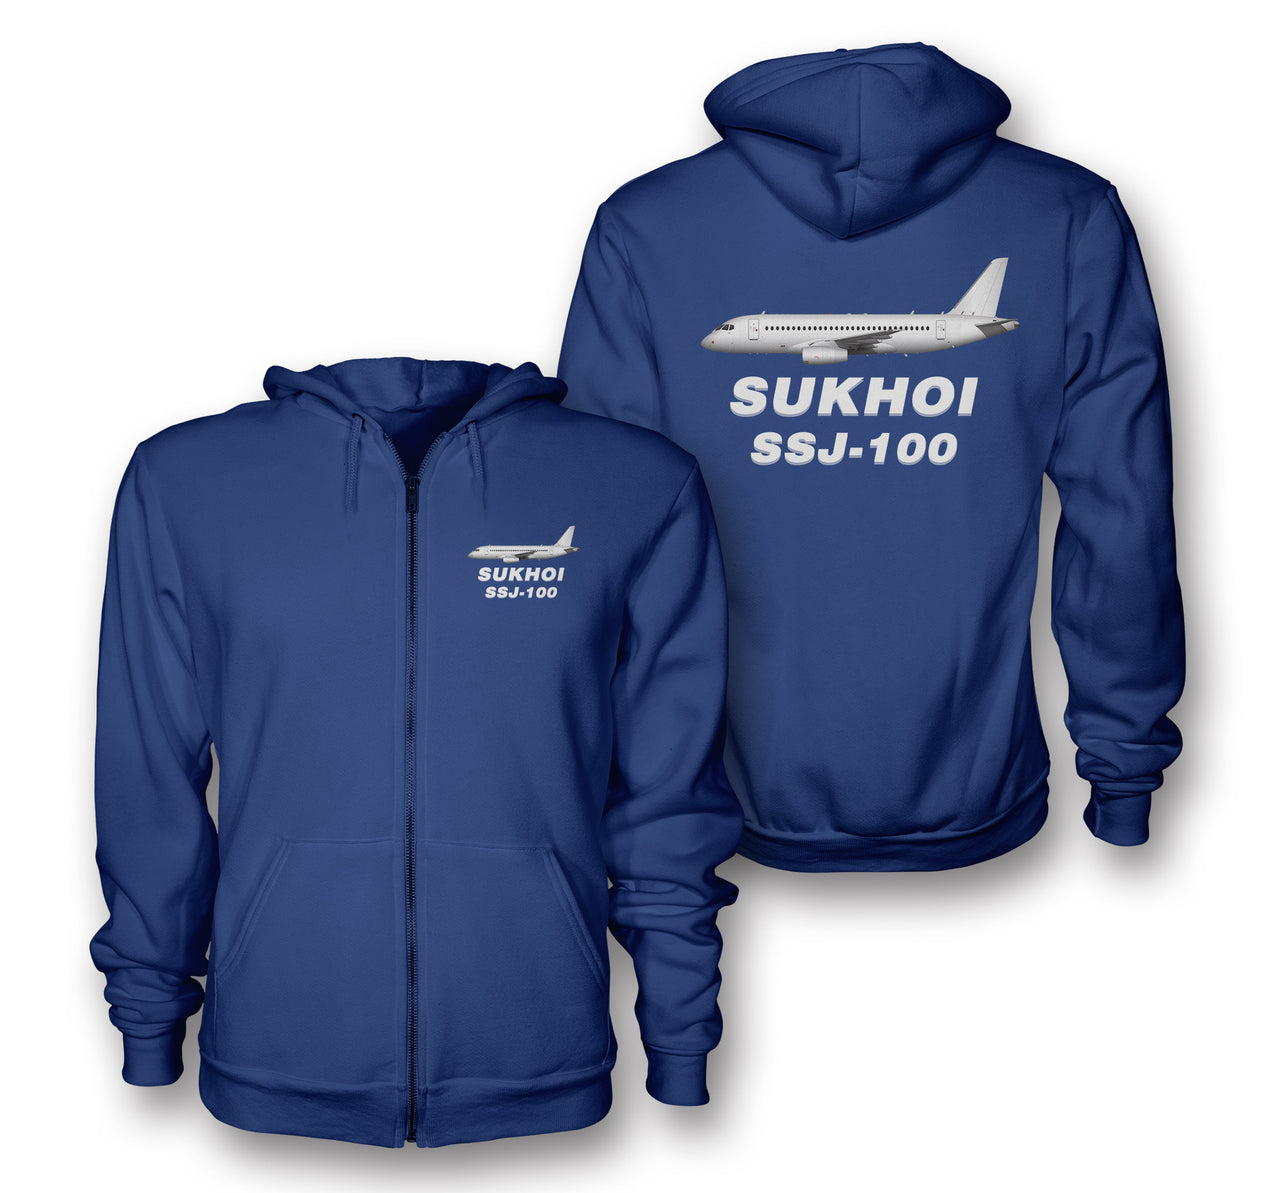 The Sukhoi Superjet 100 Designed Zipped Hoodies